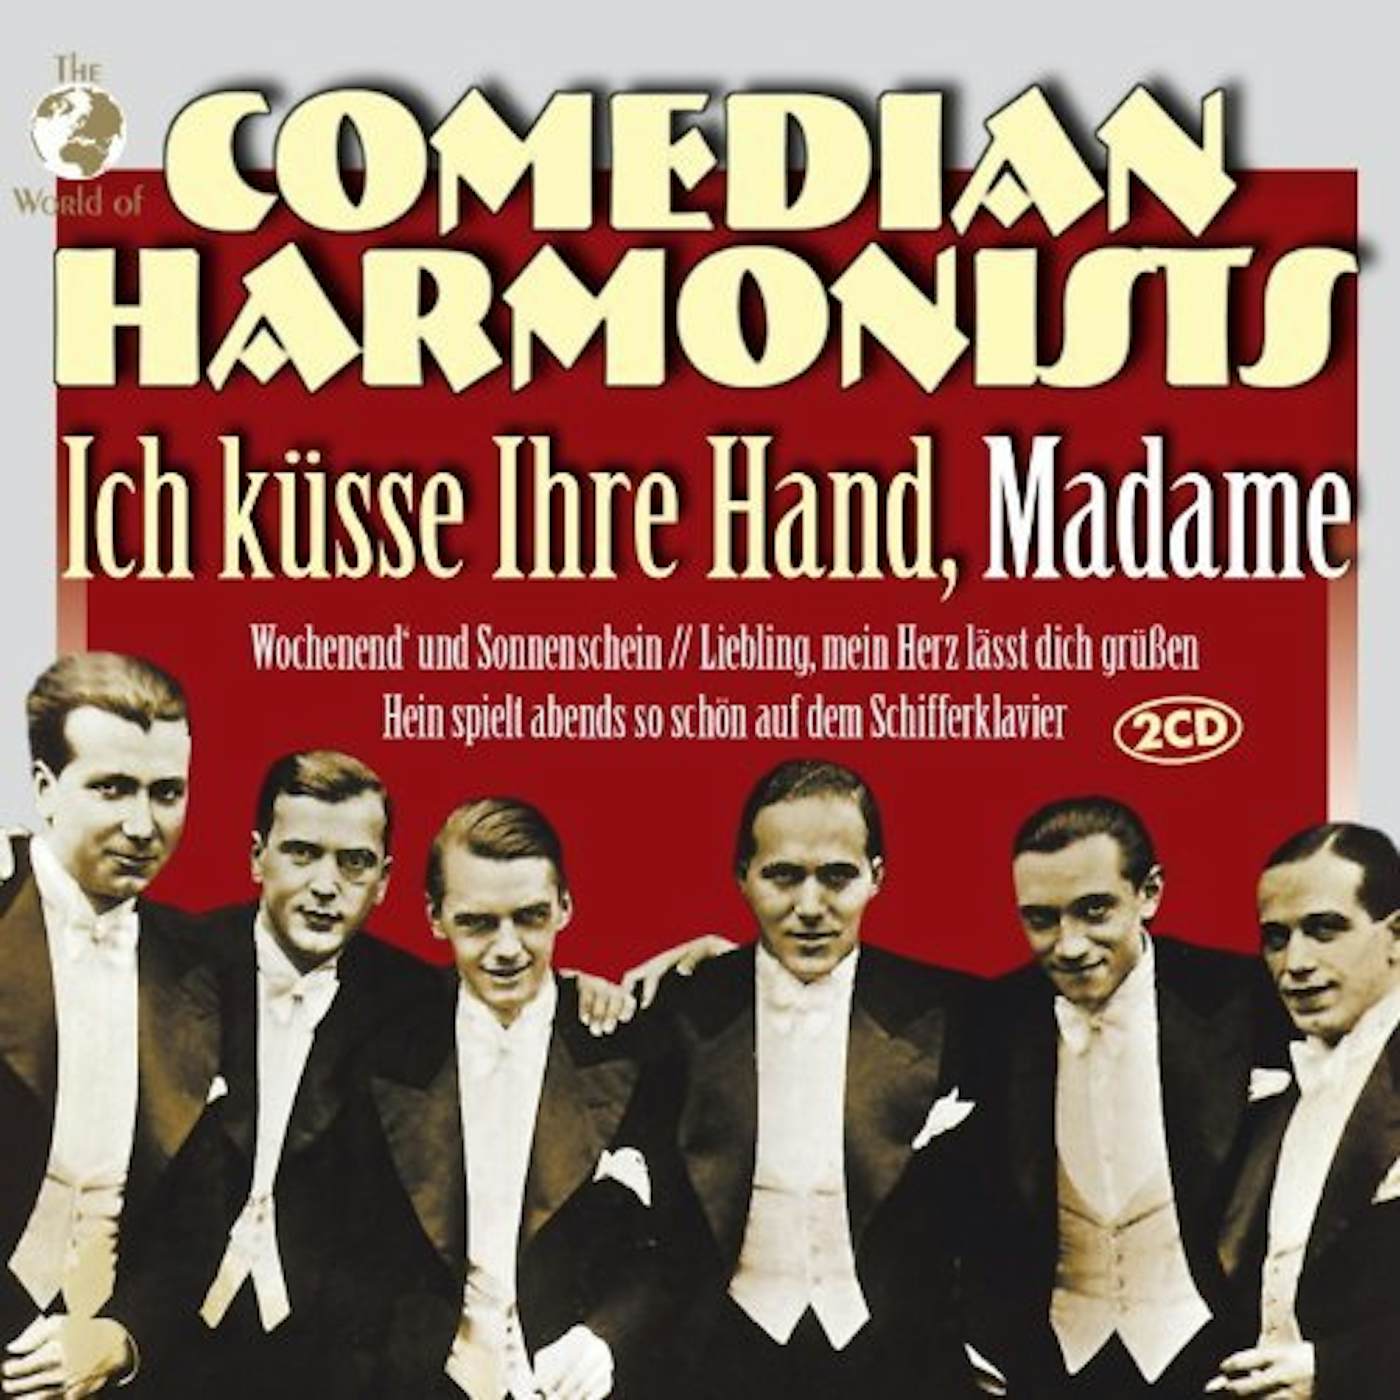 Comedian Harmonists ICH KUSSE IHRE HAND, MADAME CD